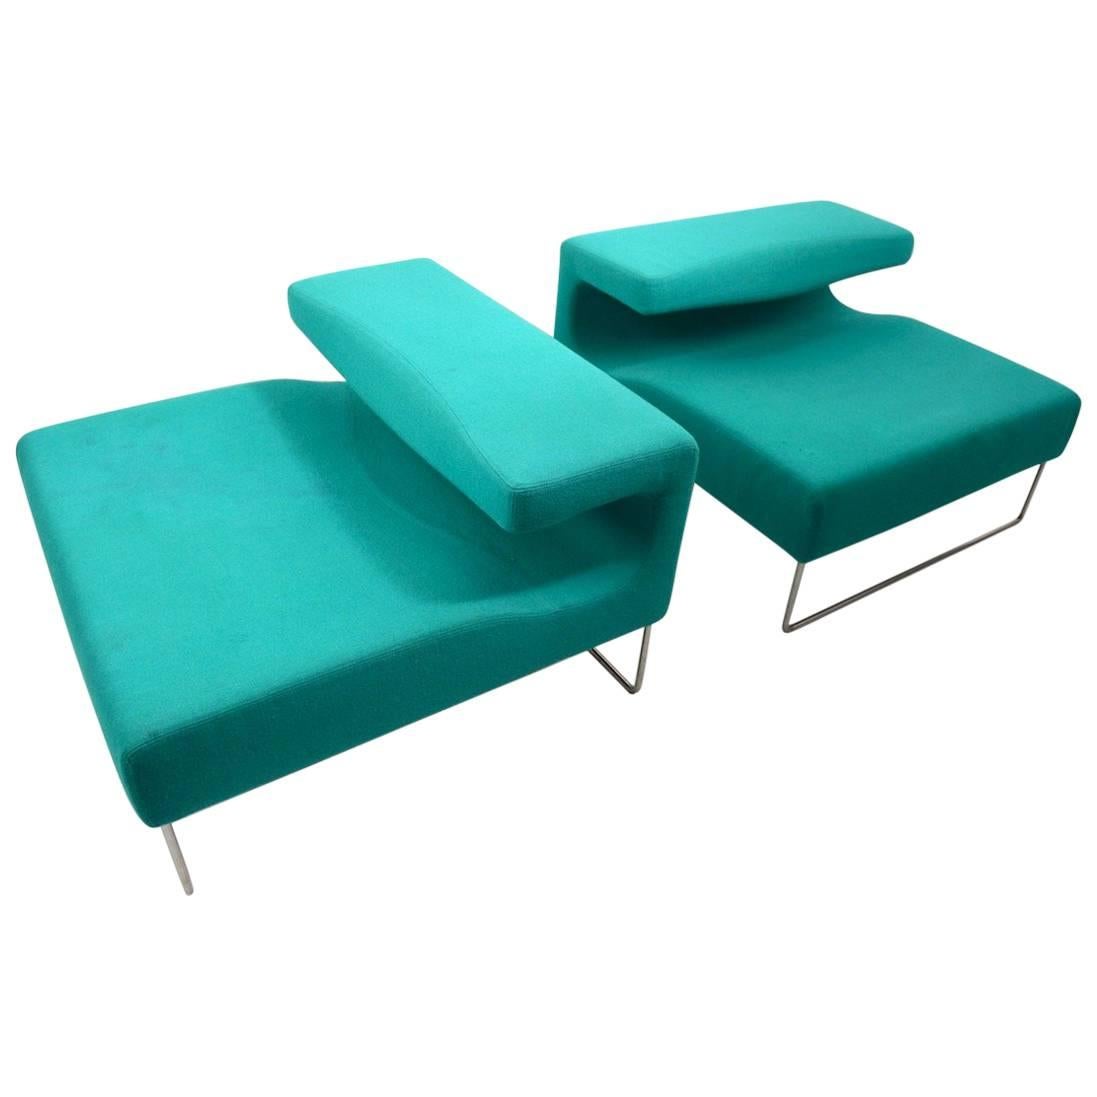 Pair of Postmodern Italian Lounge Chairs